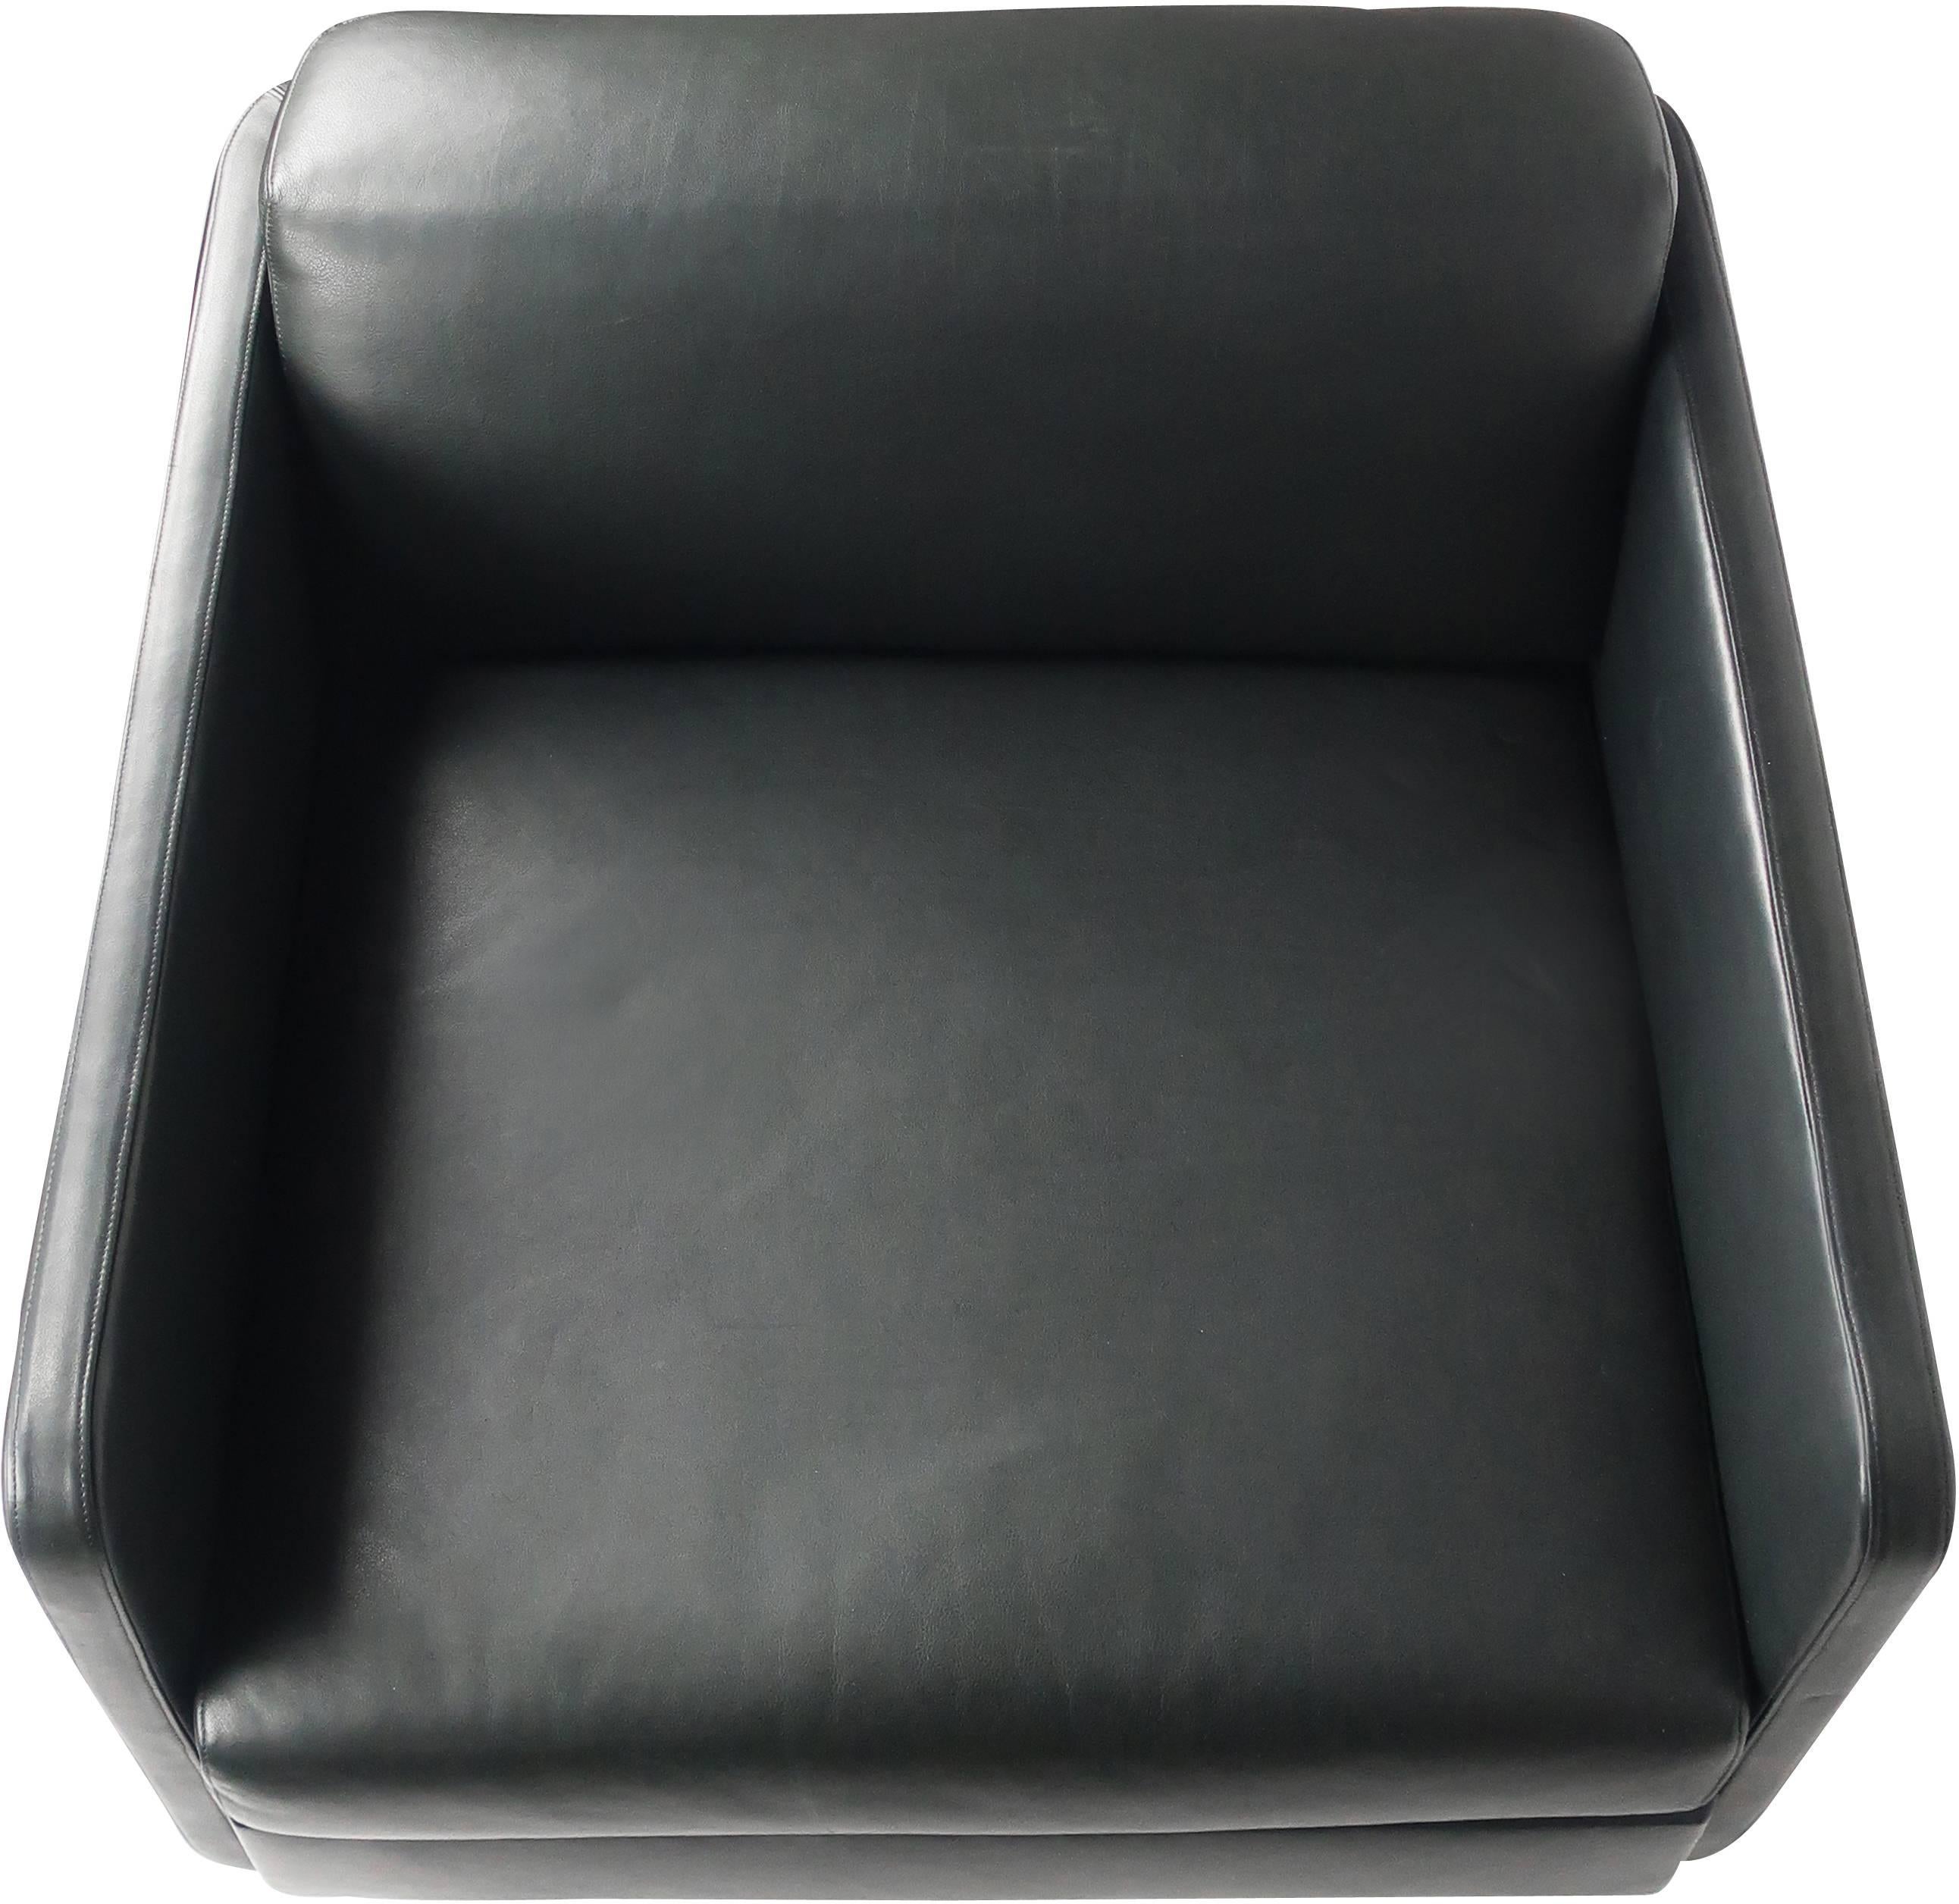 Contemporary Black Leather Gaia Armchair by Arik Levy for Bernhardt Design